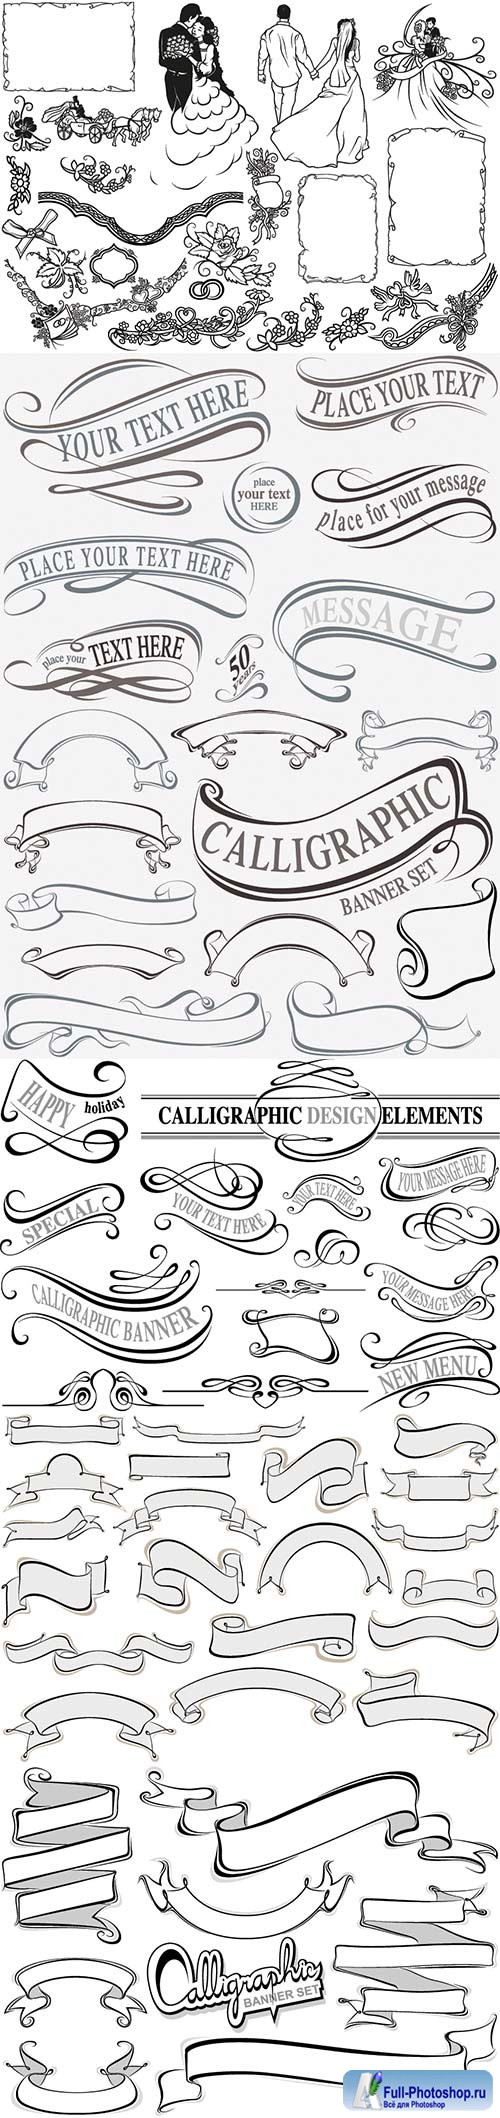 Calligraphic elements collection, design elements illustration